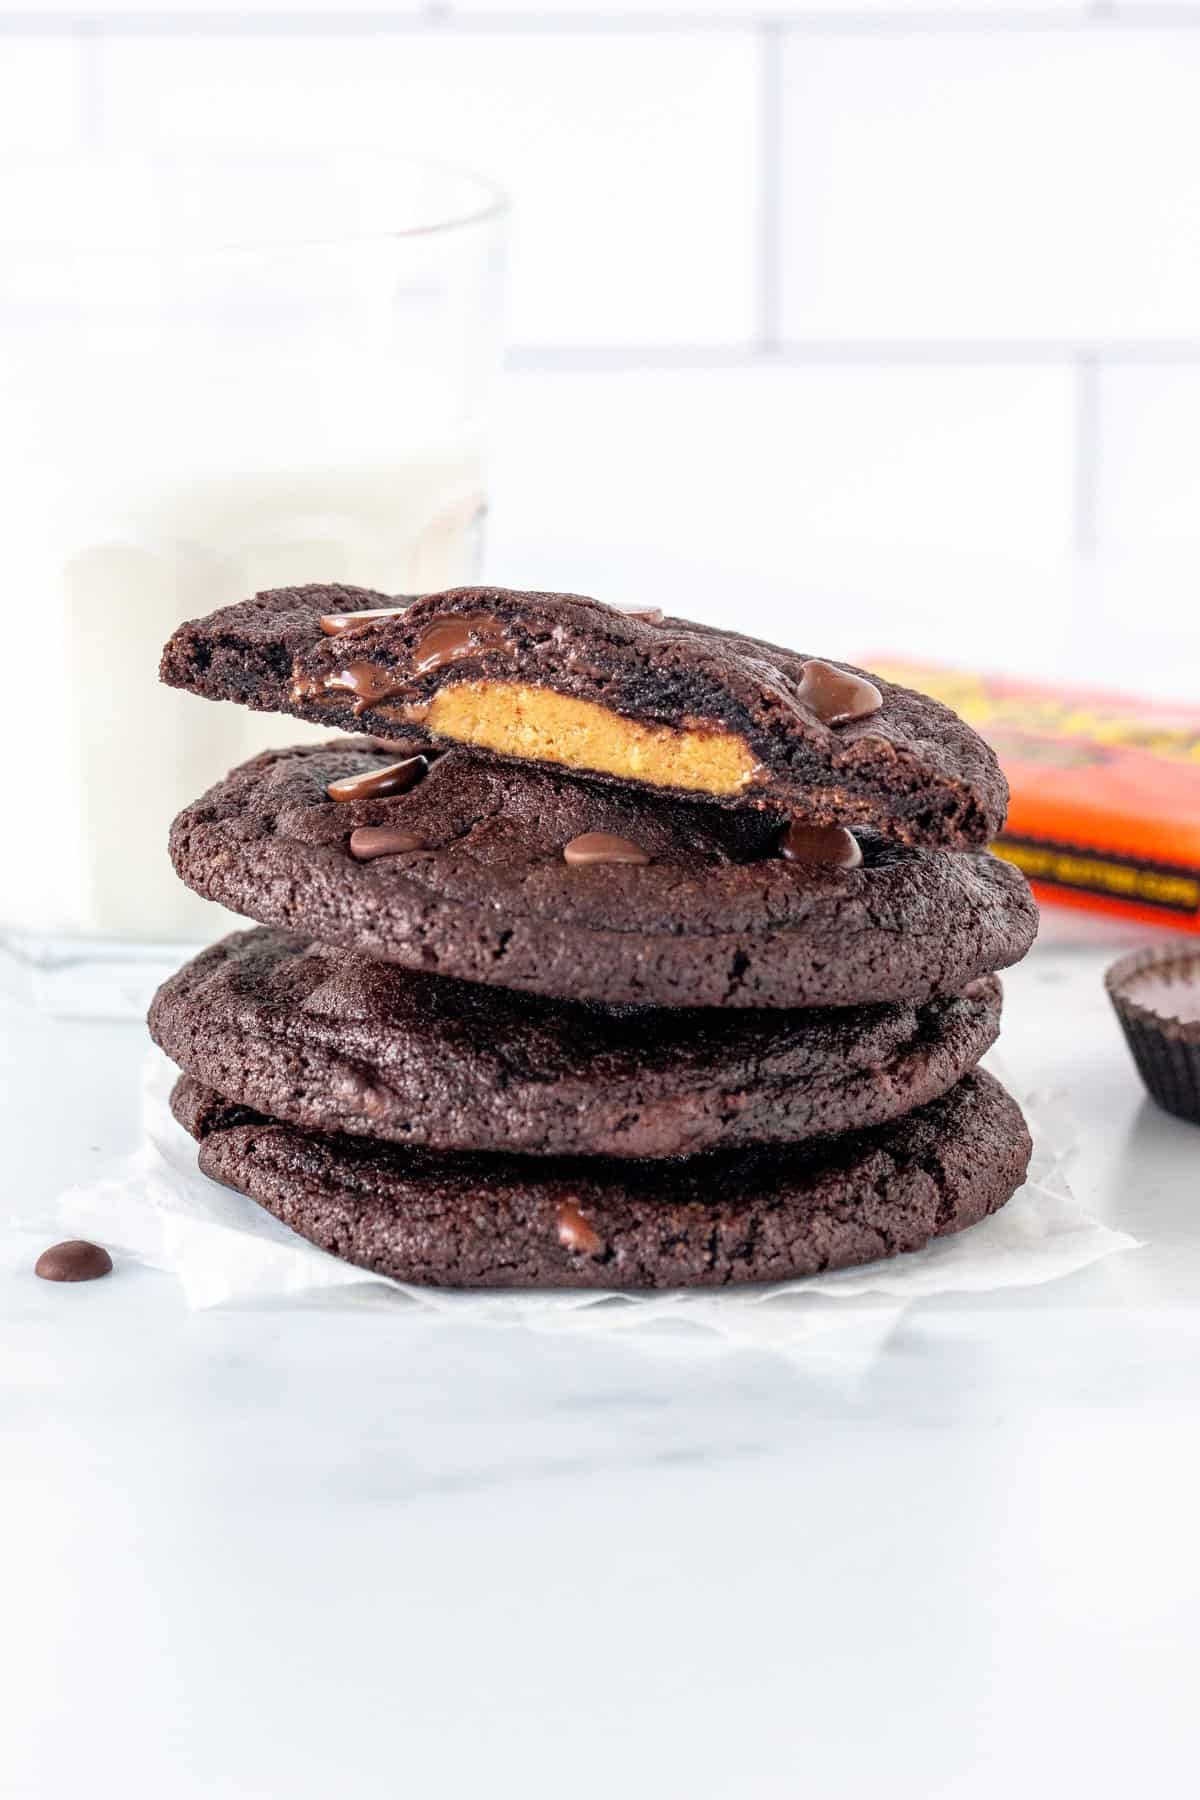 Stack of Reese's double chocolate cookies, with top cookie broken in half